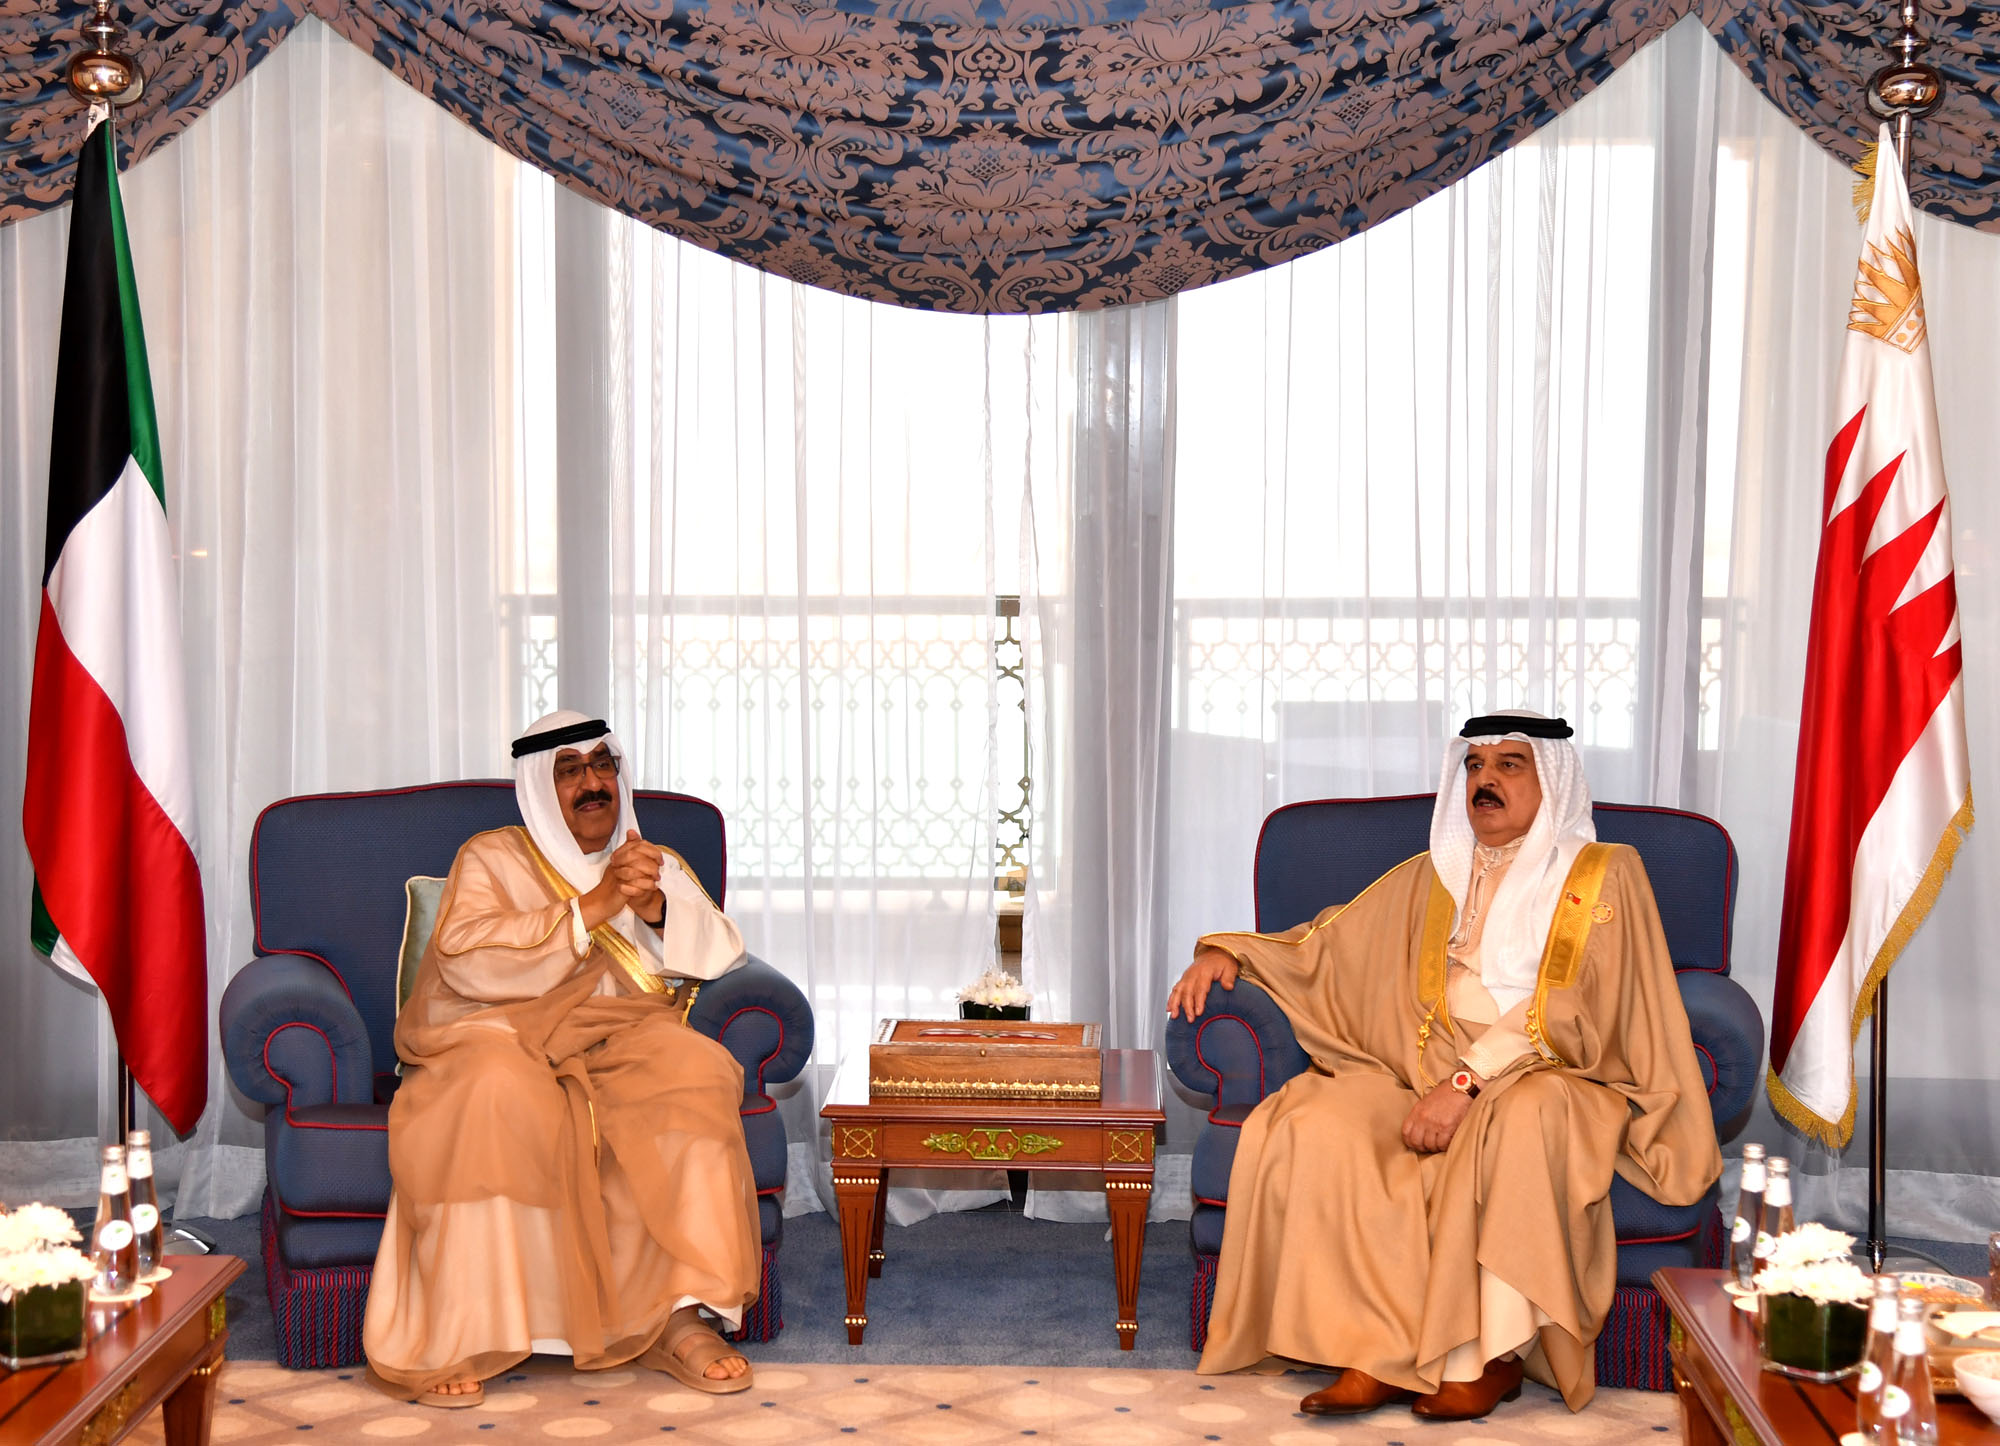 His Highness the Amir Sheikh Mishal Al-Ahmad Al-Jaber Al-Sabah and the King of Bahrain, King Hamad bin Isa Al Khalifa